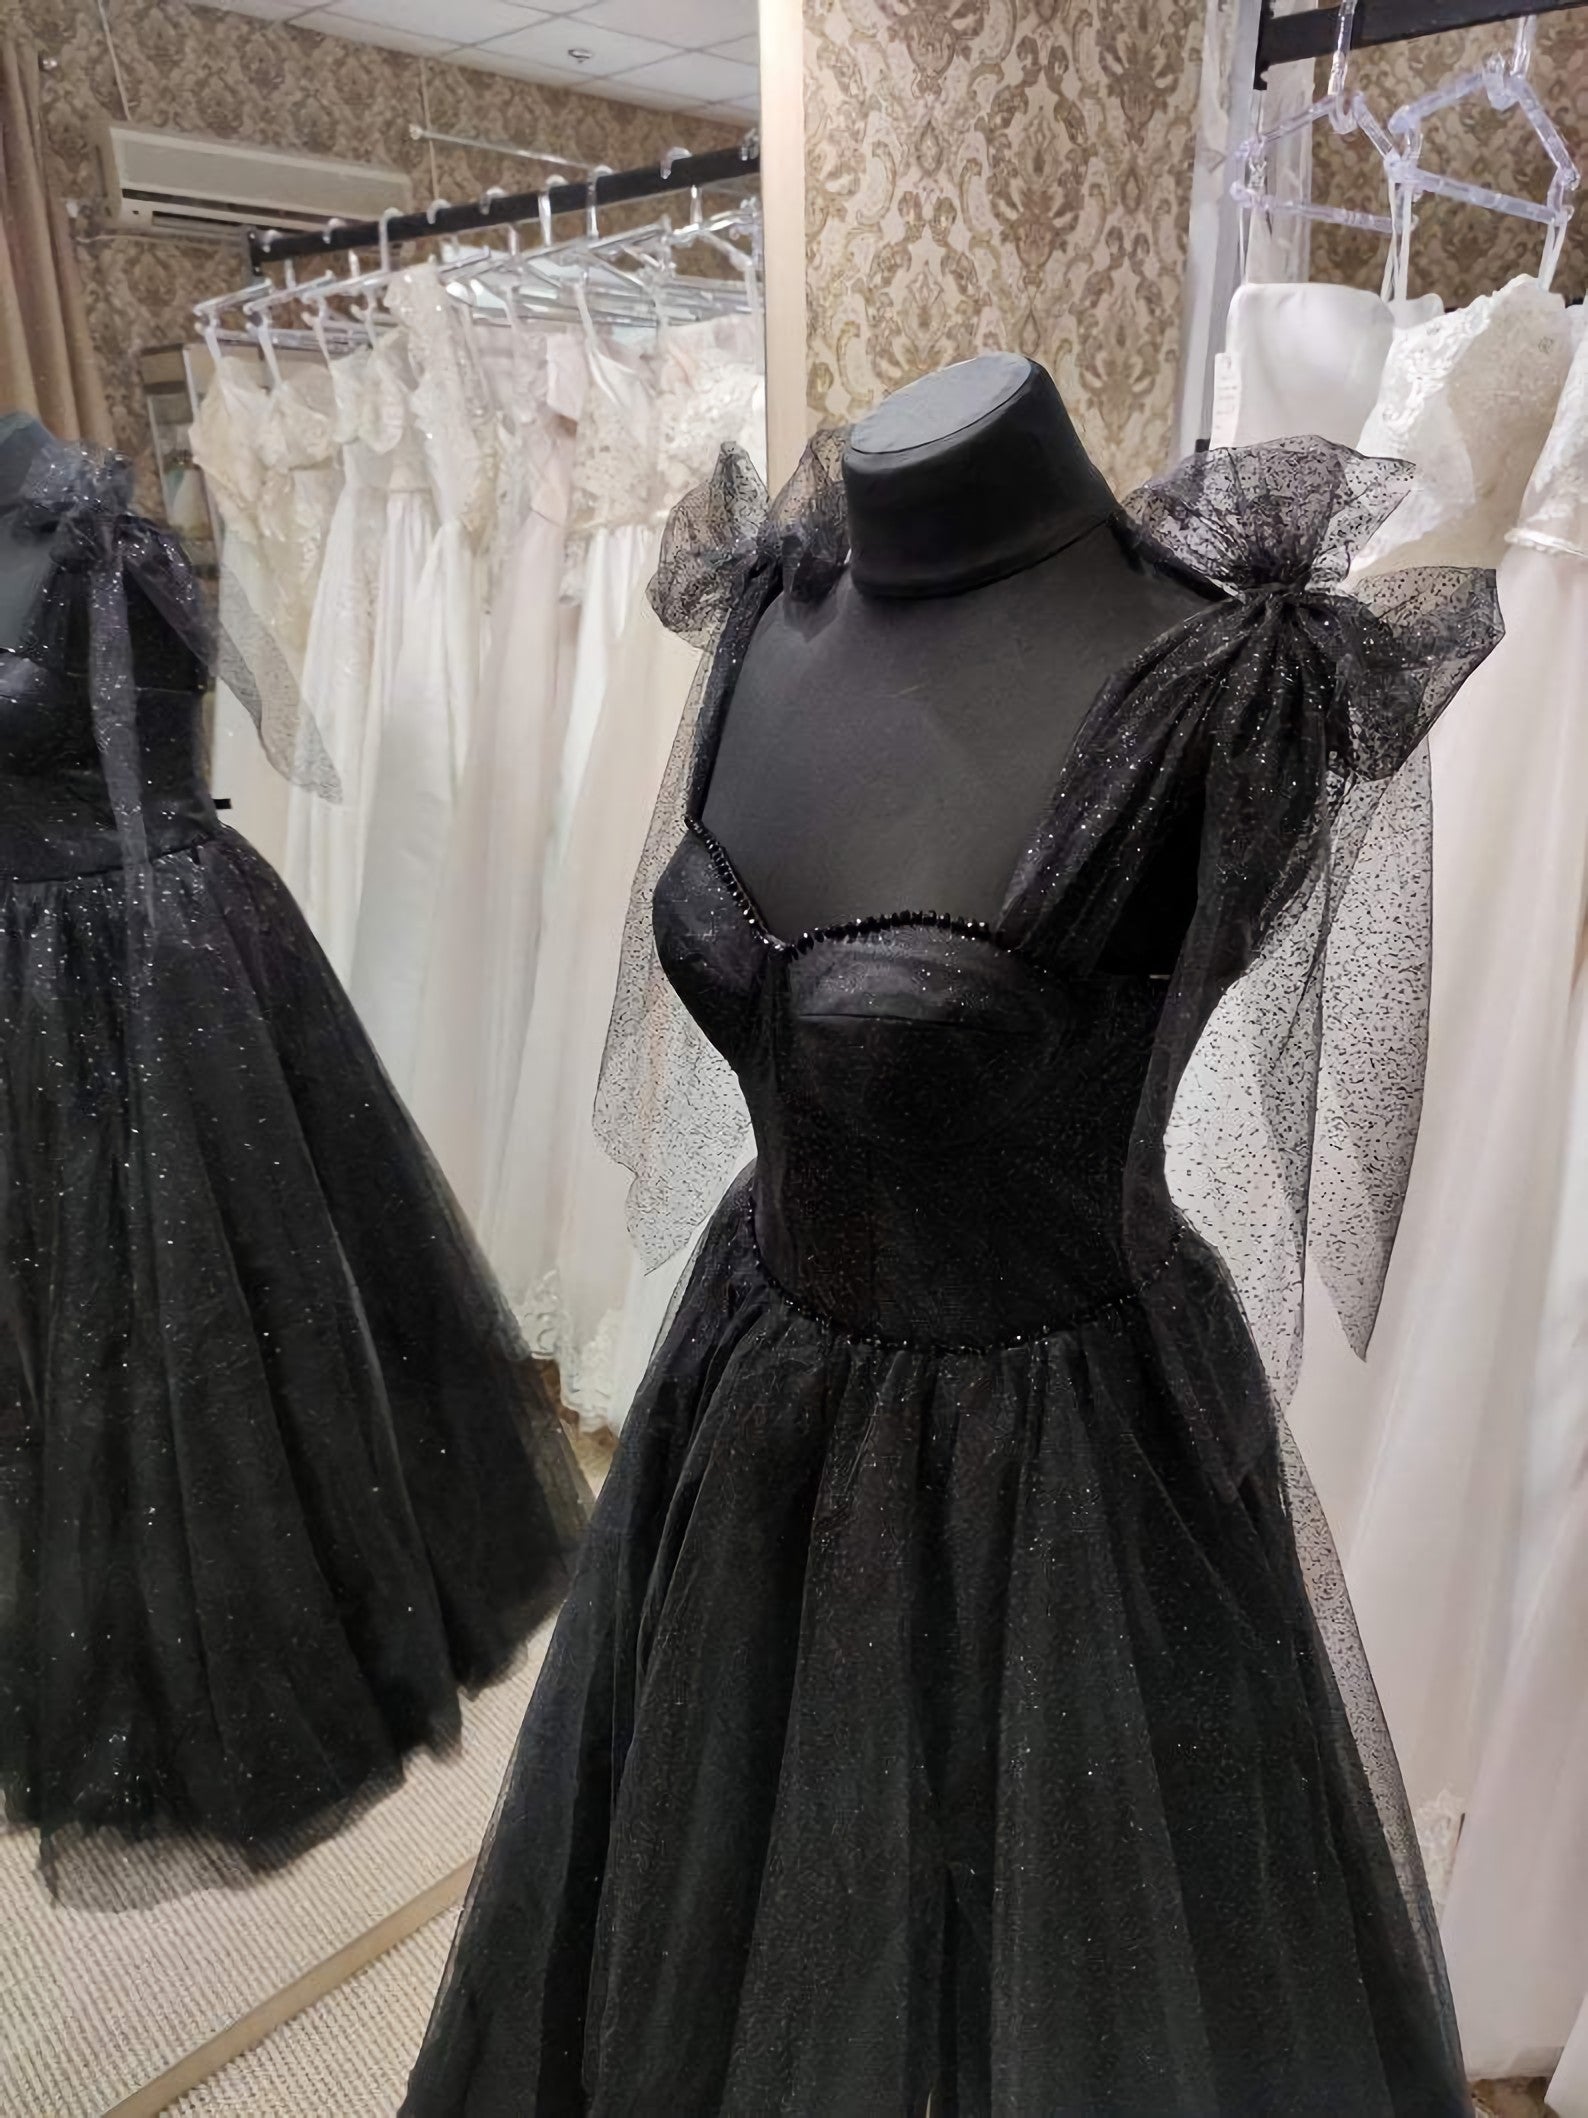 Wedding Dresse Lace, Black Tulle Dress, Sleeveless Evening Dress, Black Evening Gown Black Party Dress, Wedding Guest Dress, Corset Dress